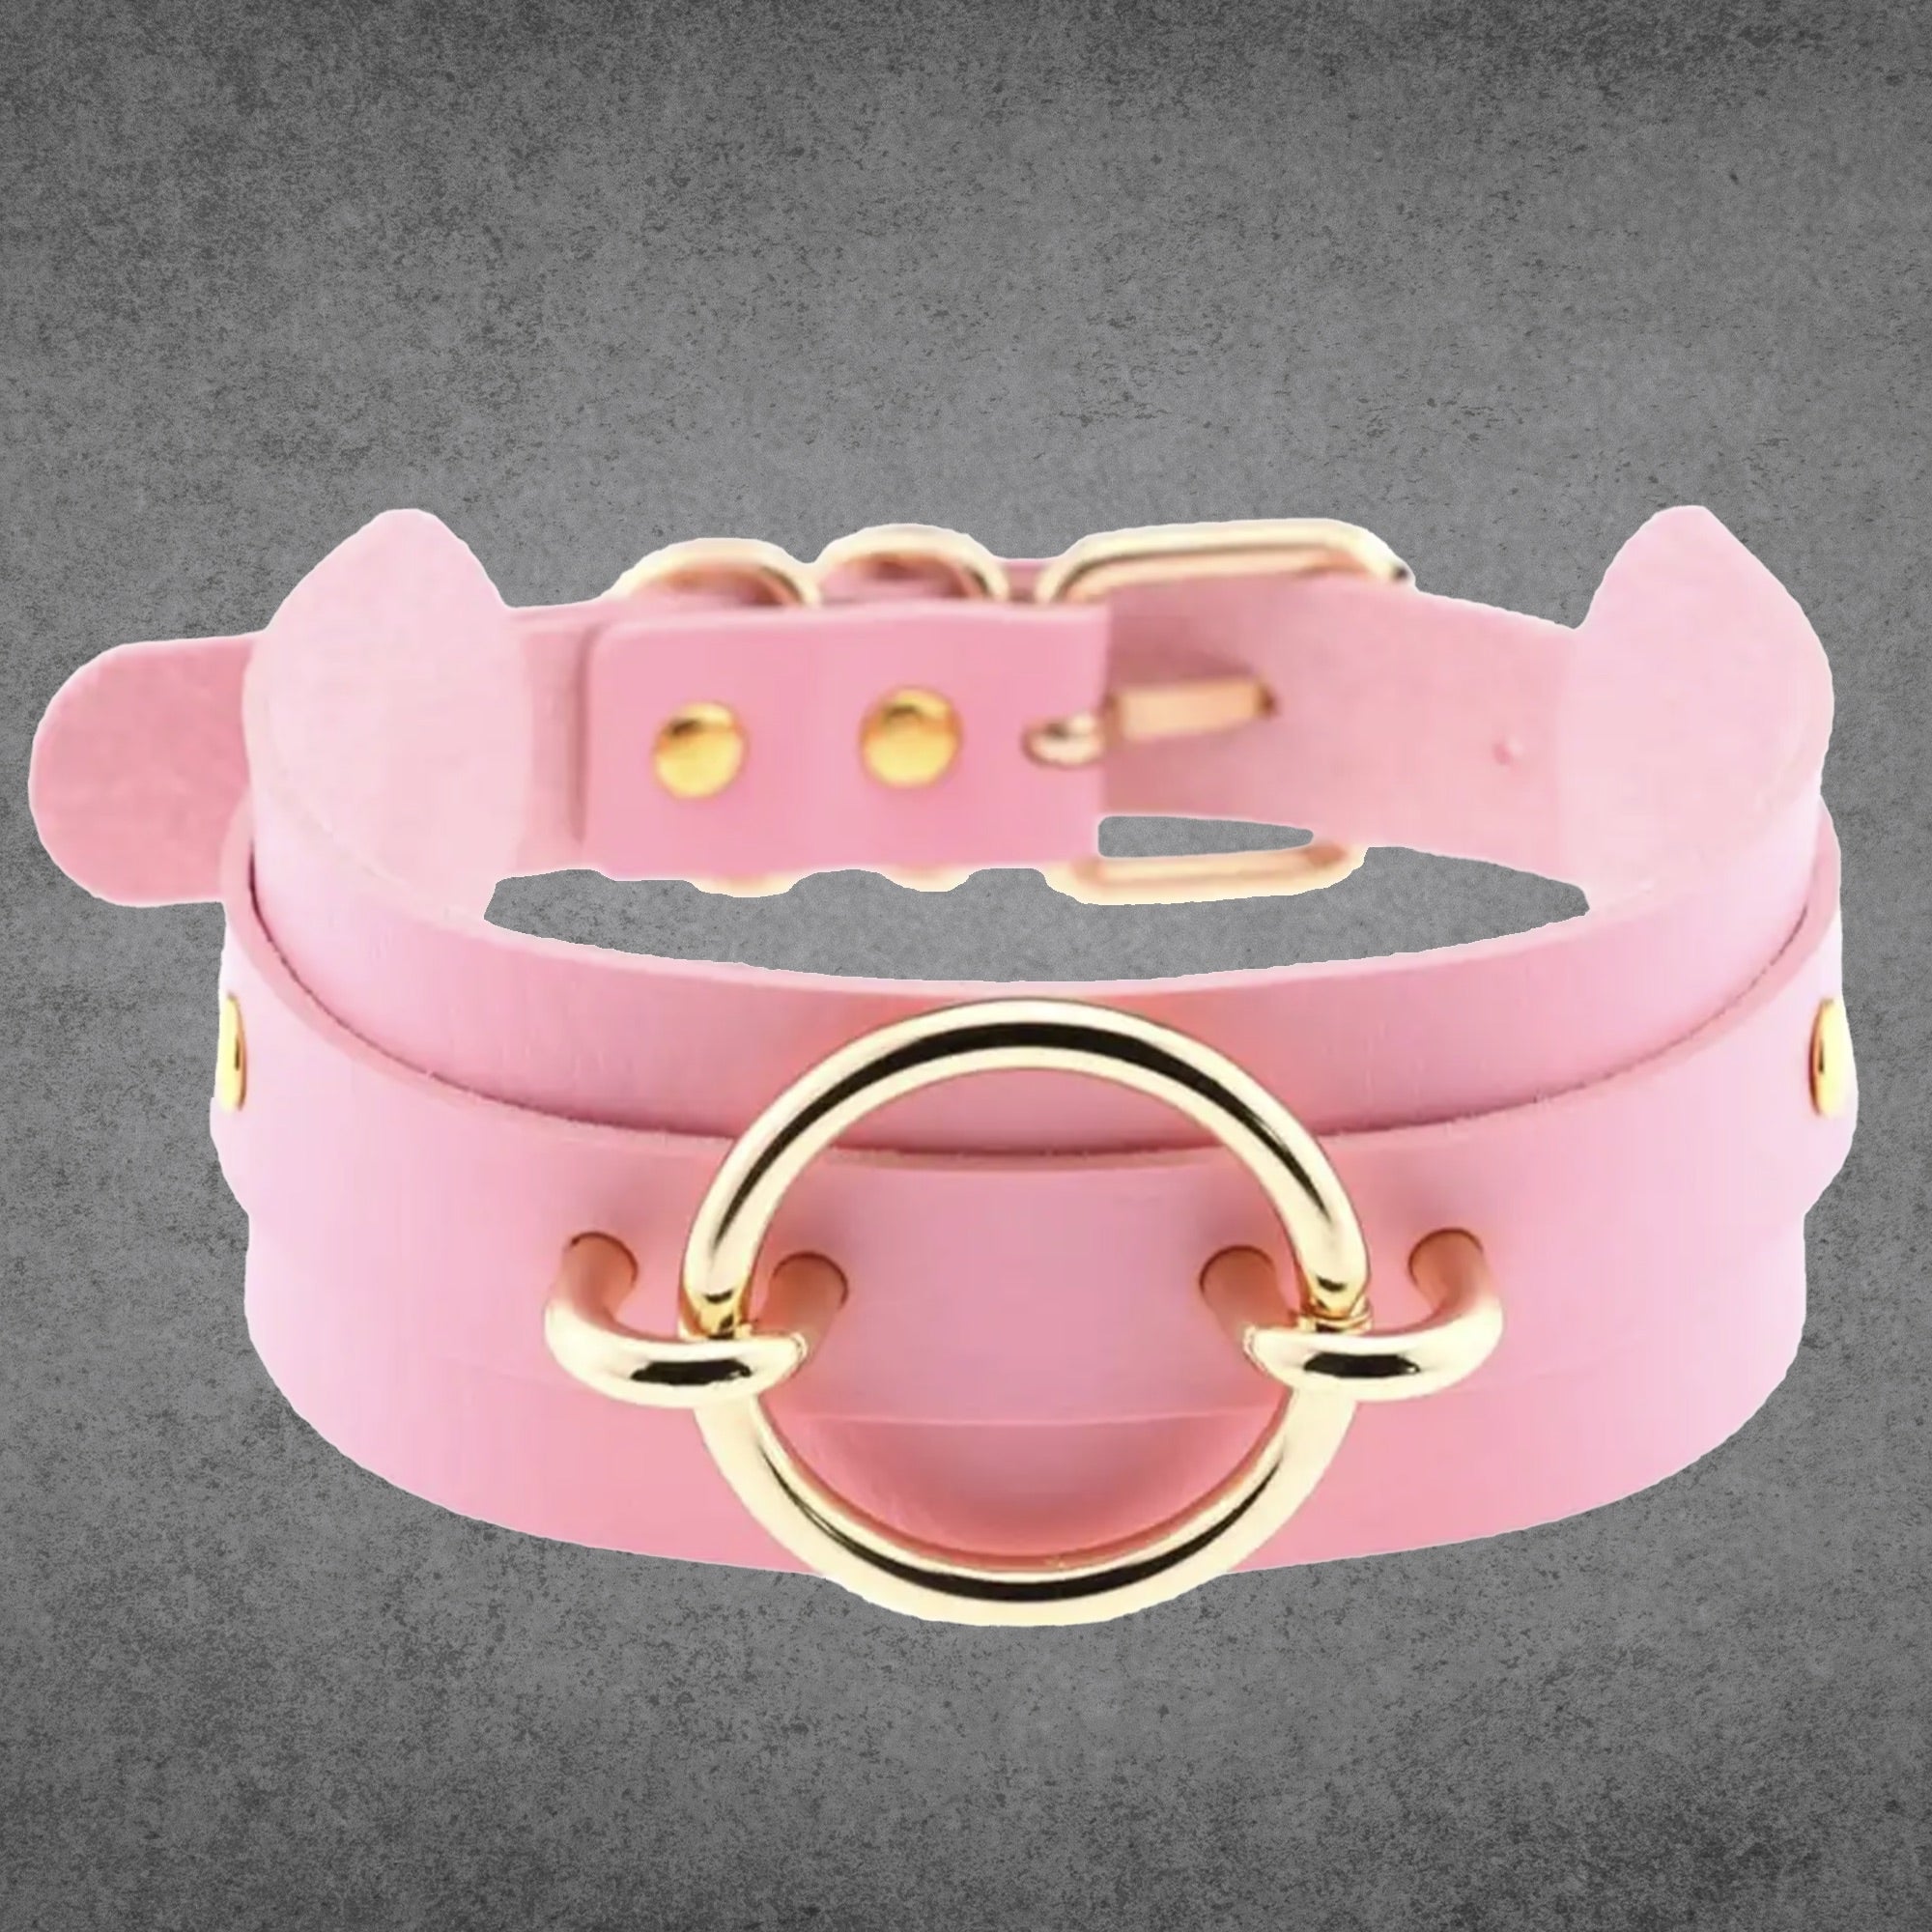 Fixed O Ring Choker Collar - Baby Pink & Gold